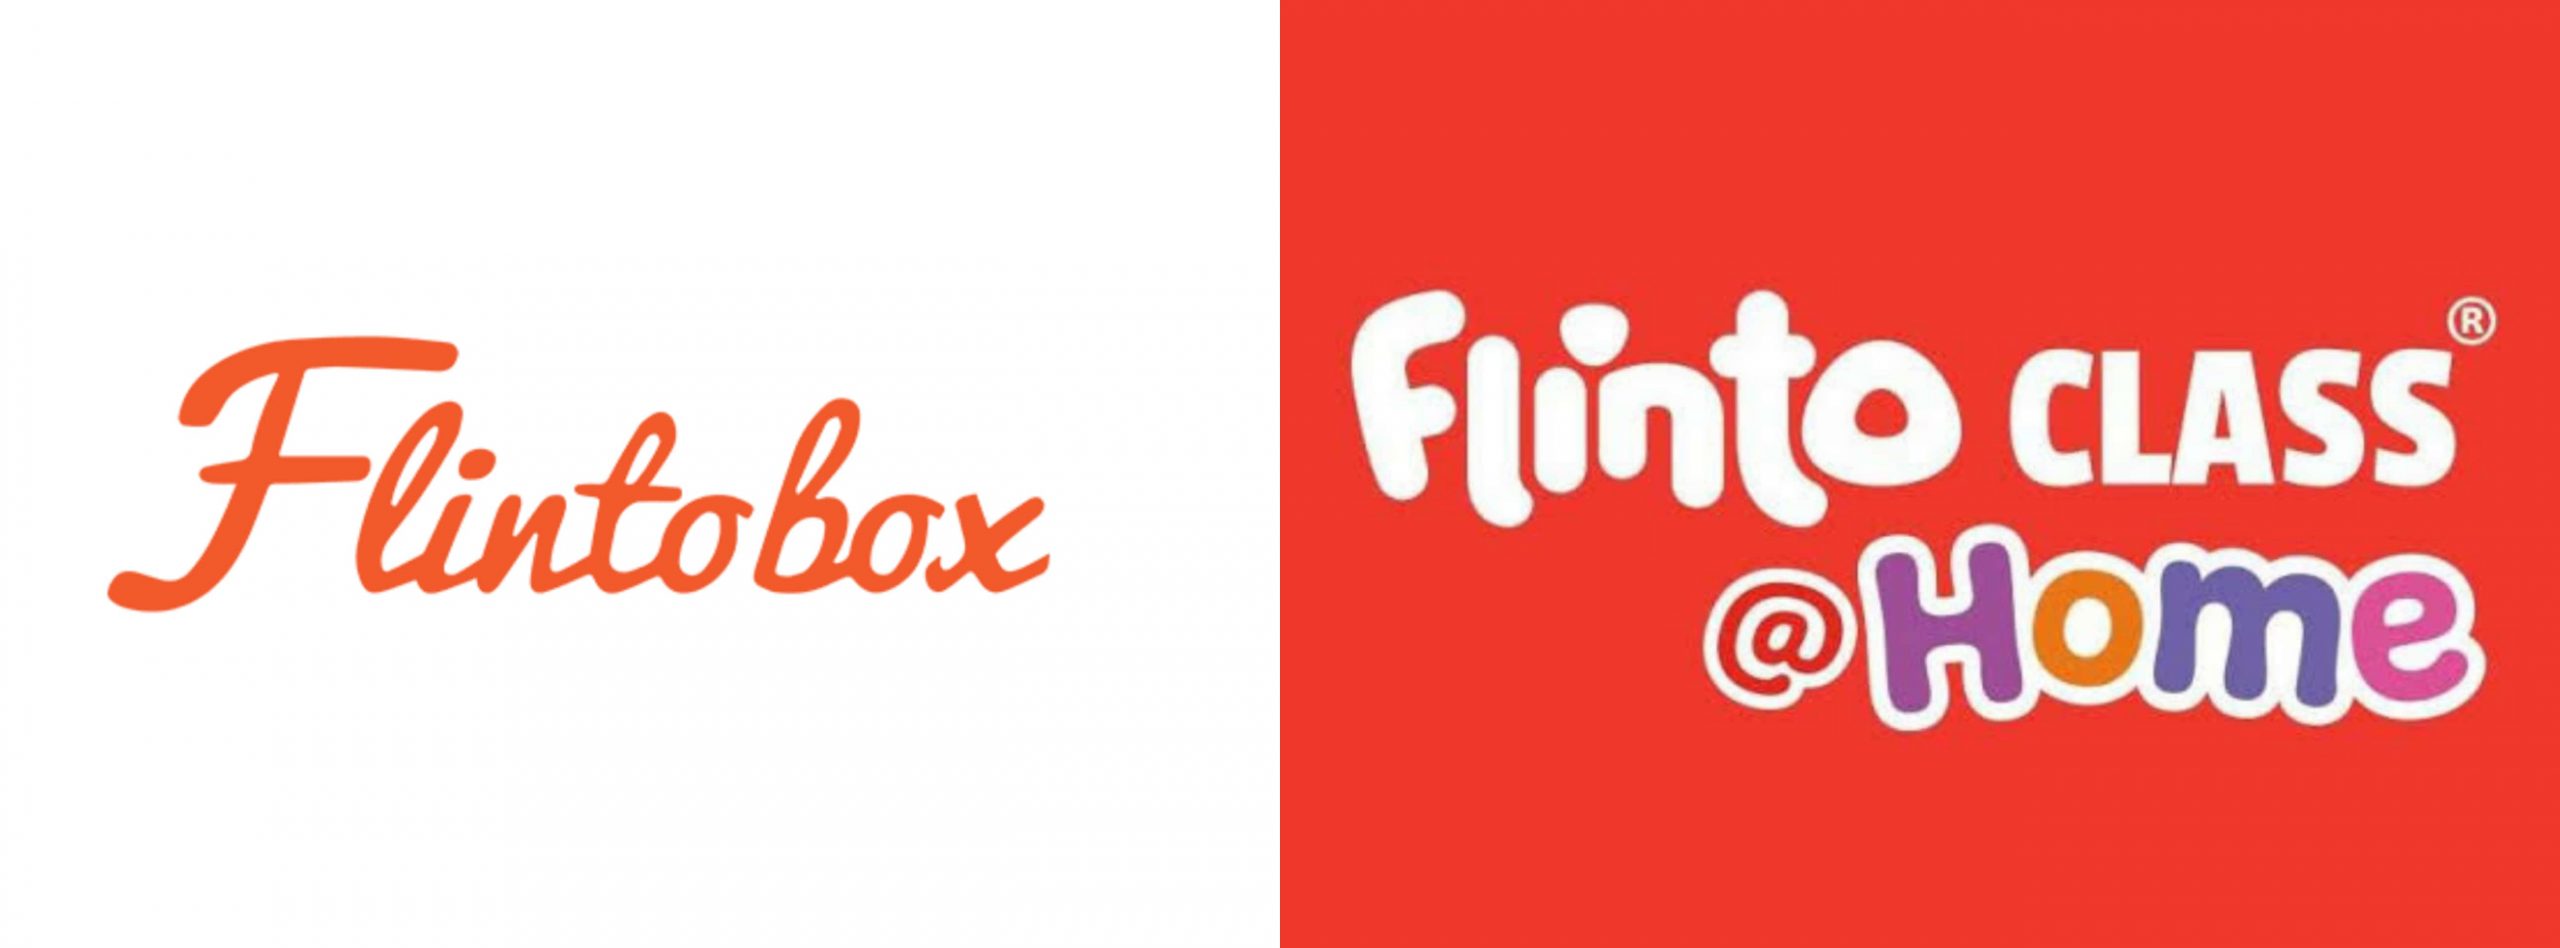 Flintobox vs Flintoclass